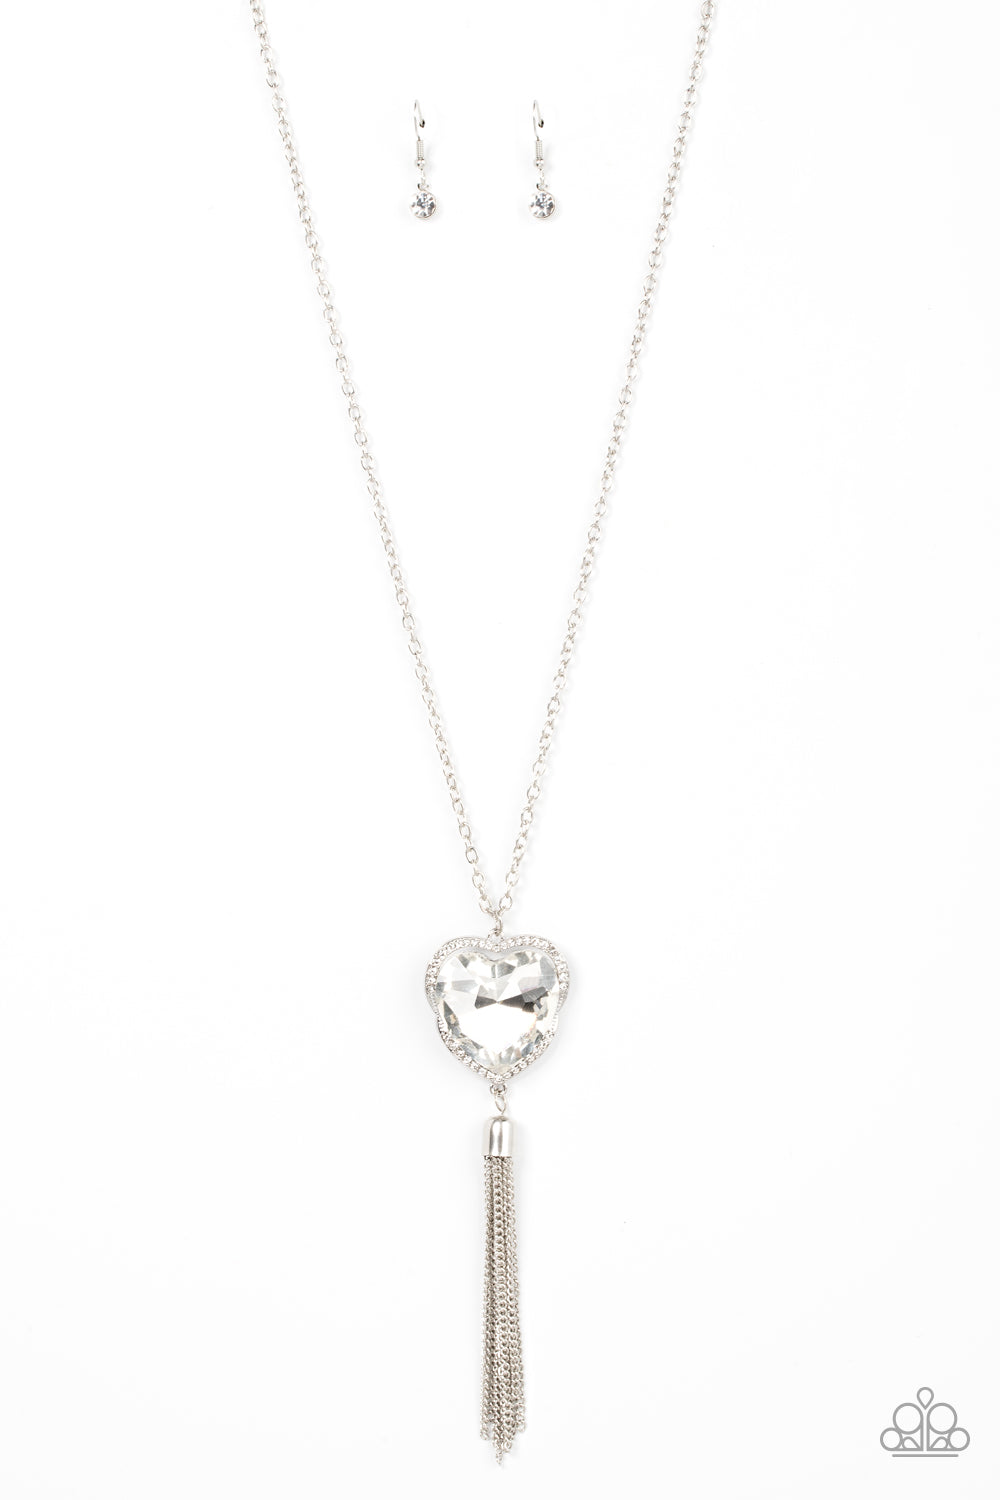 Finding My Forever - White (Heart Rhinestone) Necklace freeshipping - JewLz4u Gemstone Gallery